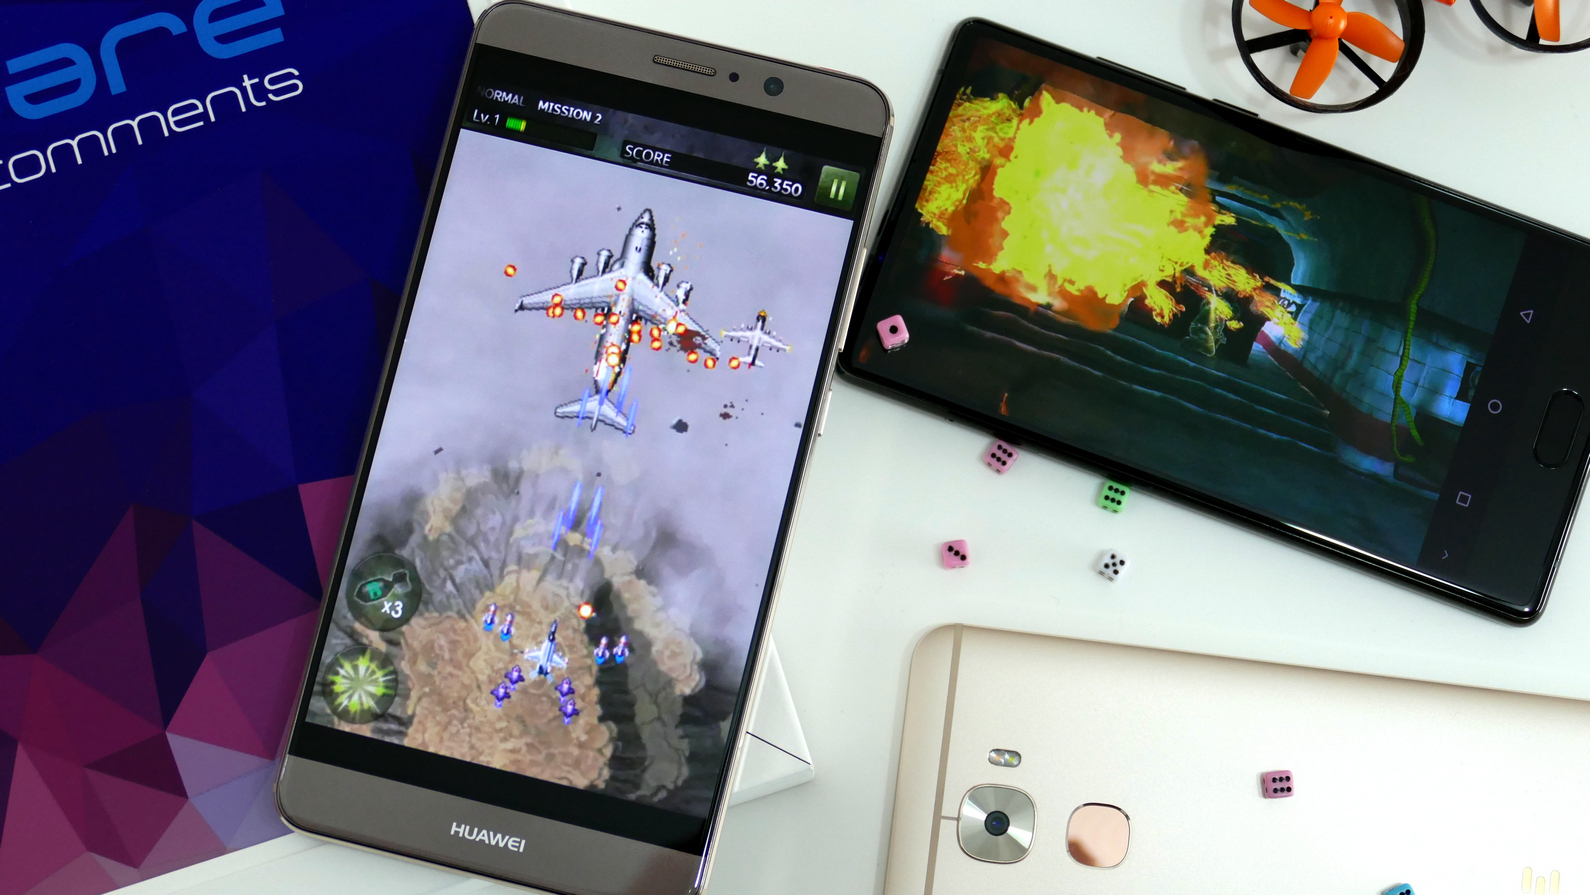 5 jogos multiplayer para Android